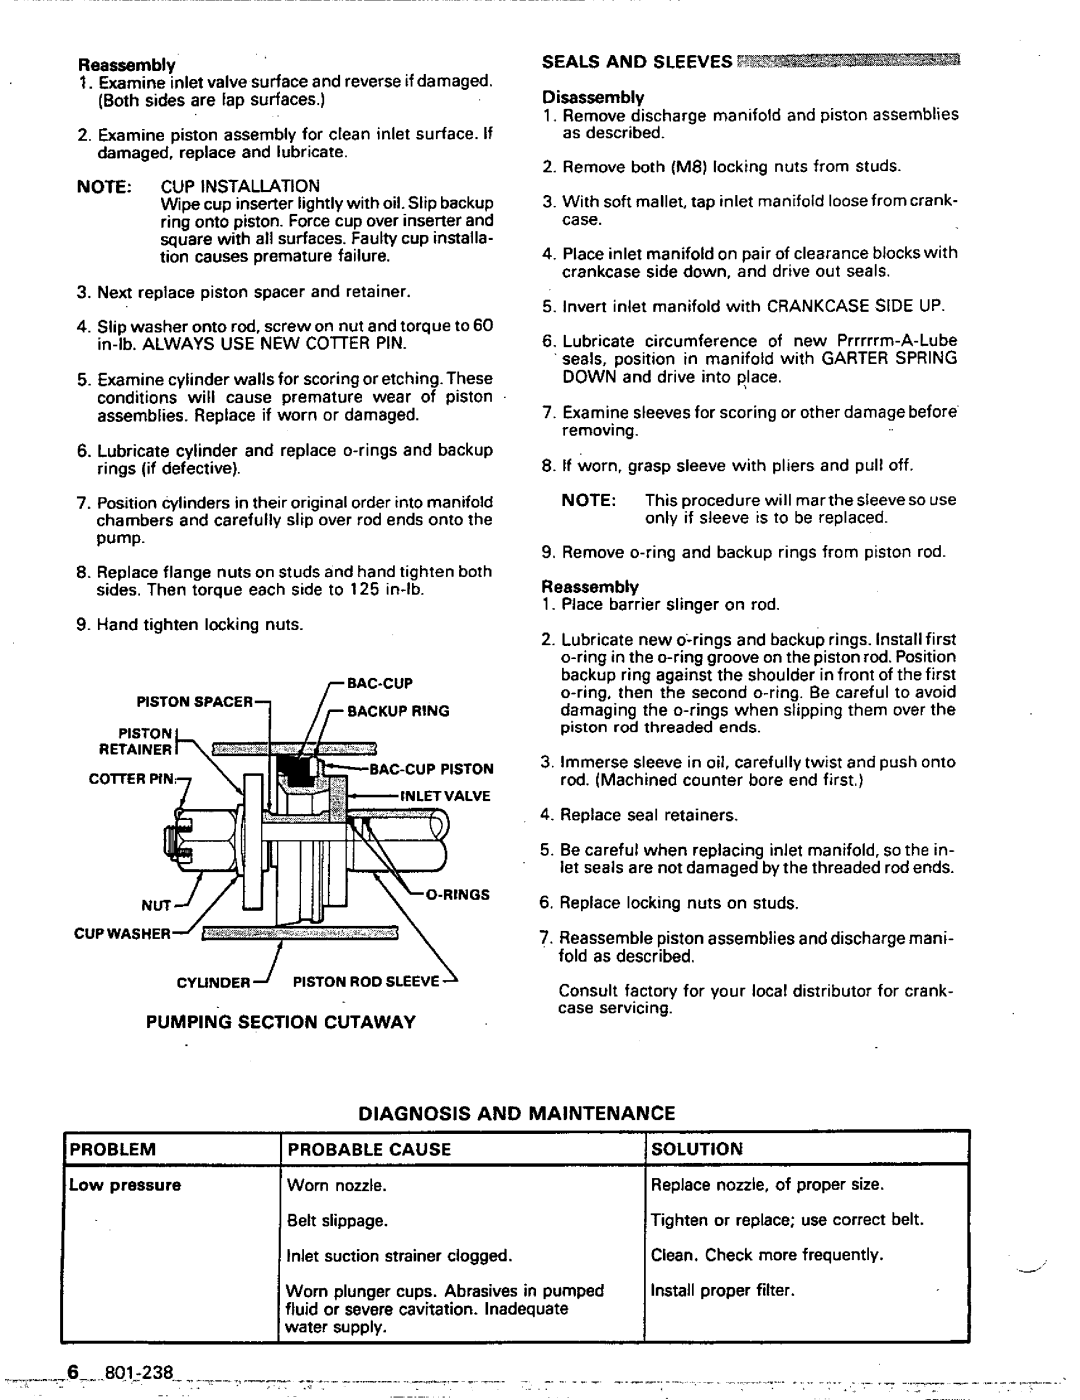 Graco Inc 800-051, 801-238, 1204E manual Diagnosis And Maintenance, Seals And Sleeves, Problem 